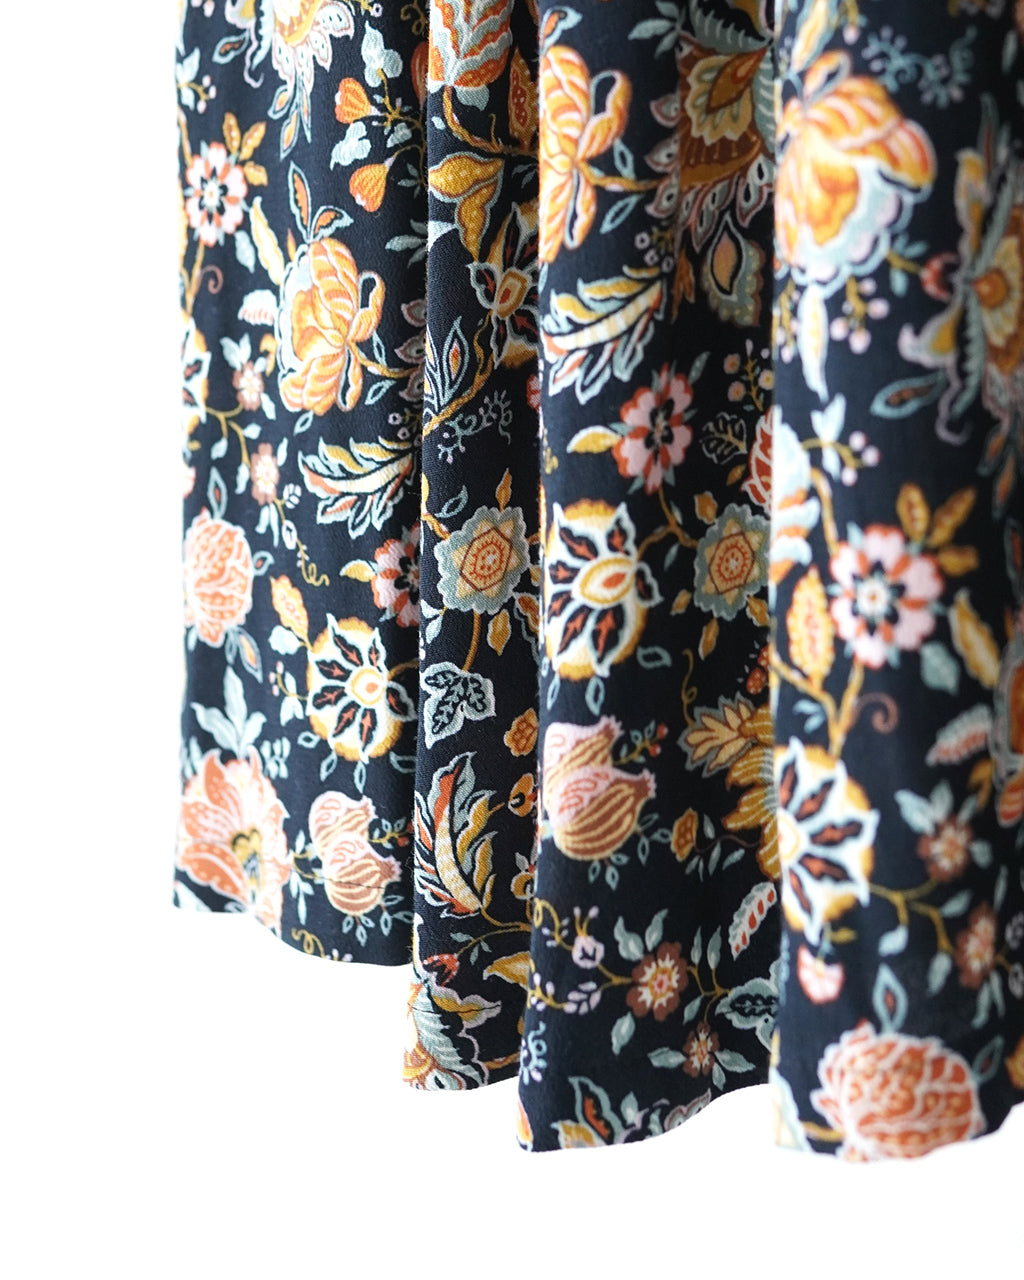 THE SHINZONE シンゾーン オリエンタル フラワー ドレス oriental FLOWER DRESS 花柄 ワンピース レディース  24SMSOP04【送料無料】